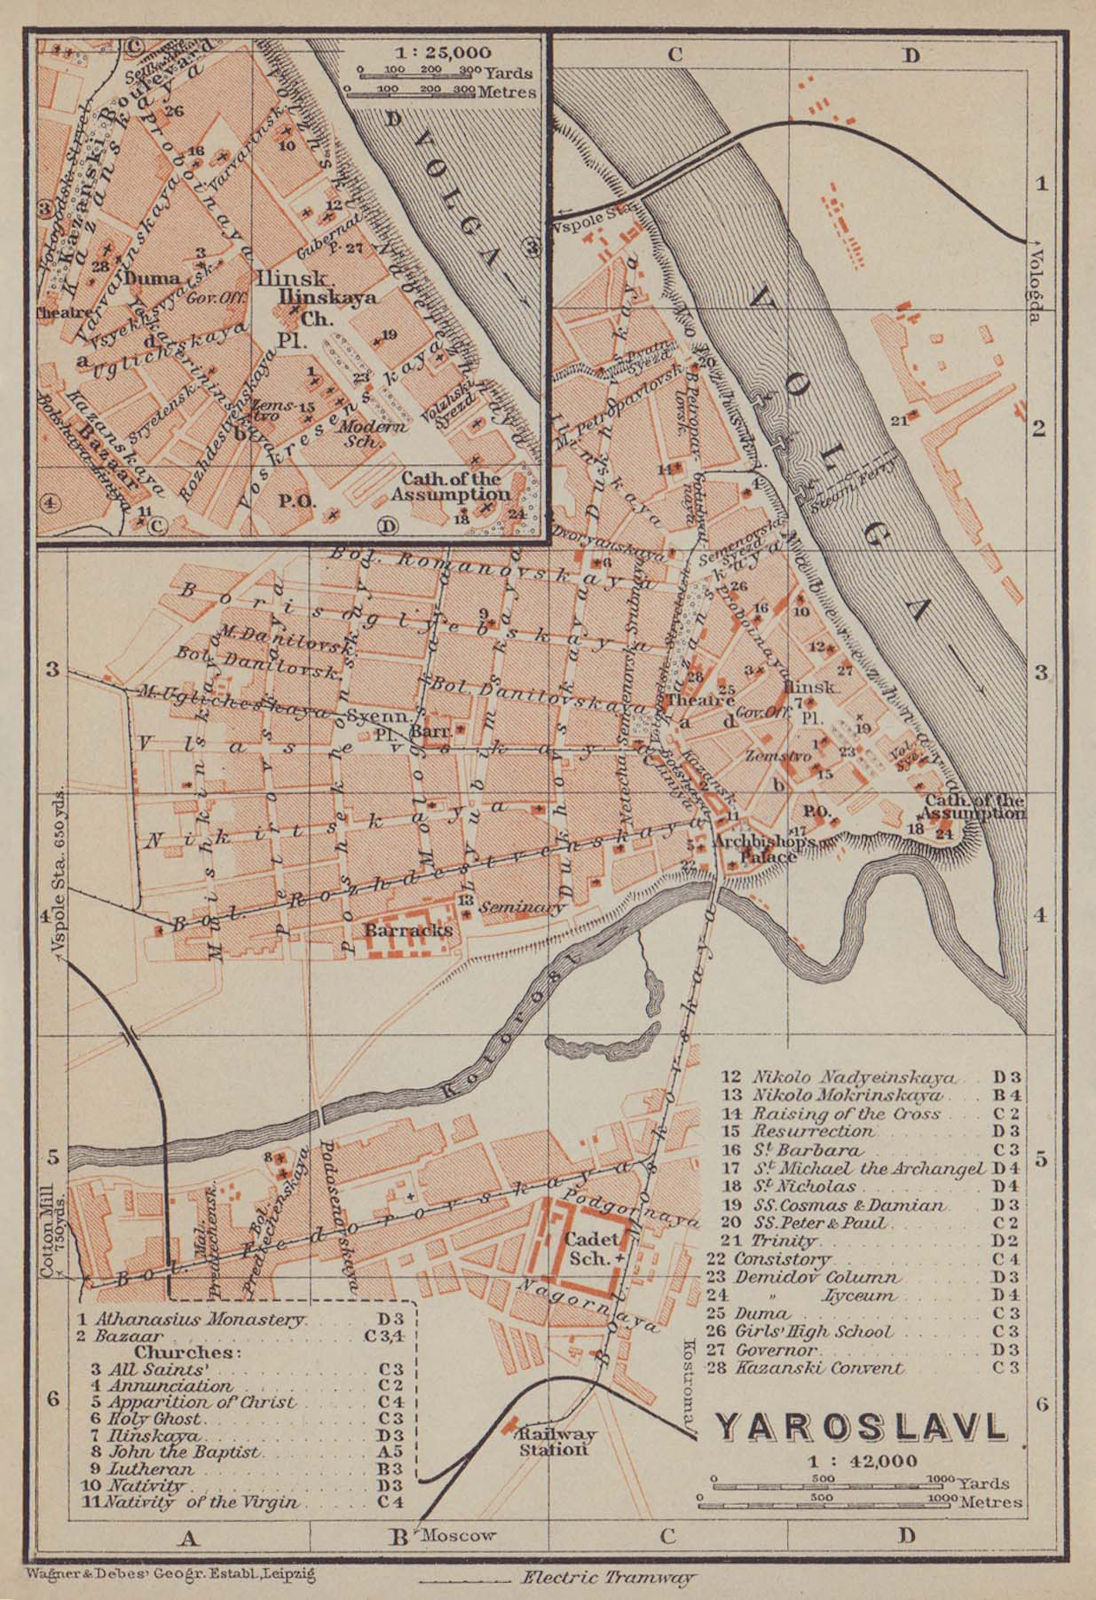 Associate Product Yaroslavl town/city plan. Russia. Jarosslawl. BAEDEKER 1914 old antique map